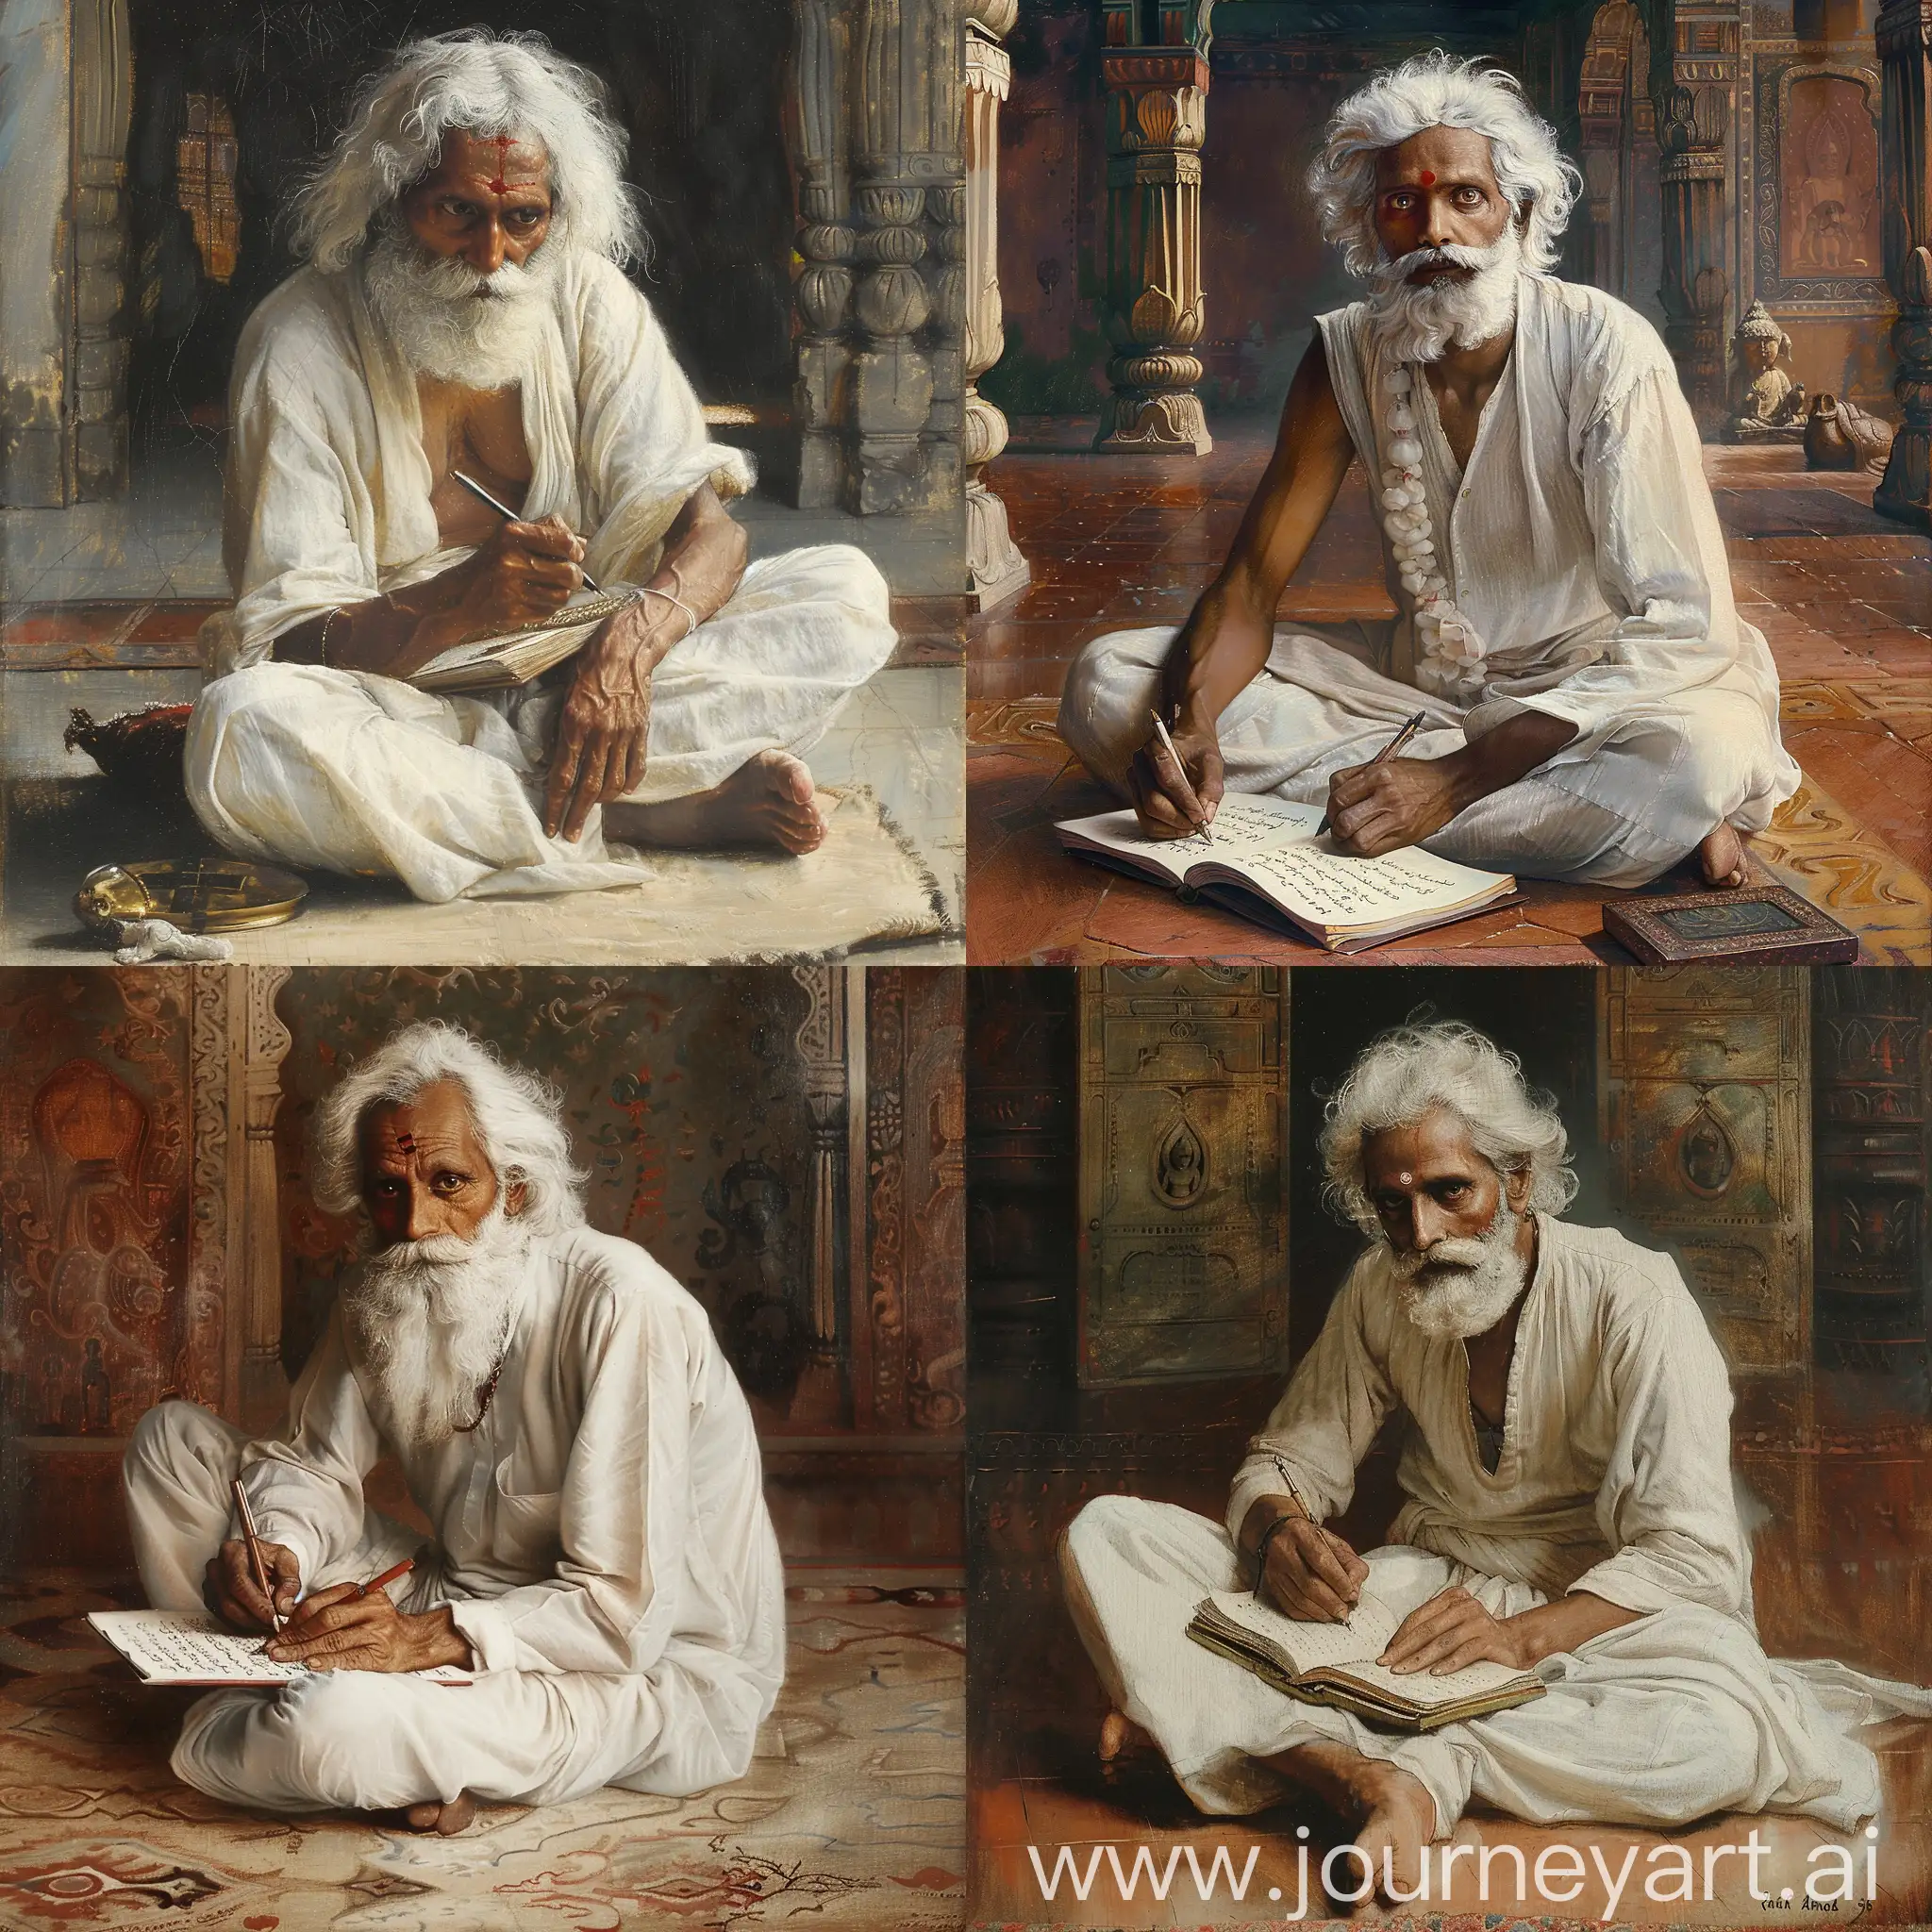 rahimdas indian muslim poet writing a couplet sitting white moustache and beard wearing white clothes, eyes like buddha, sitting on the floor